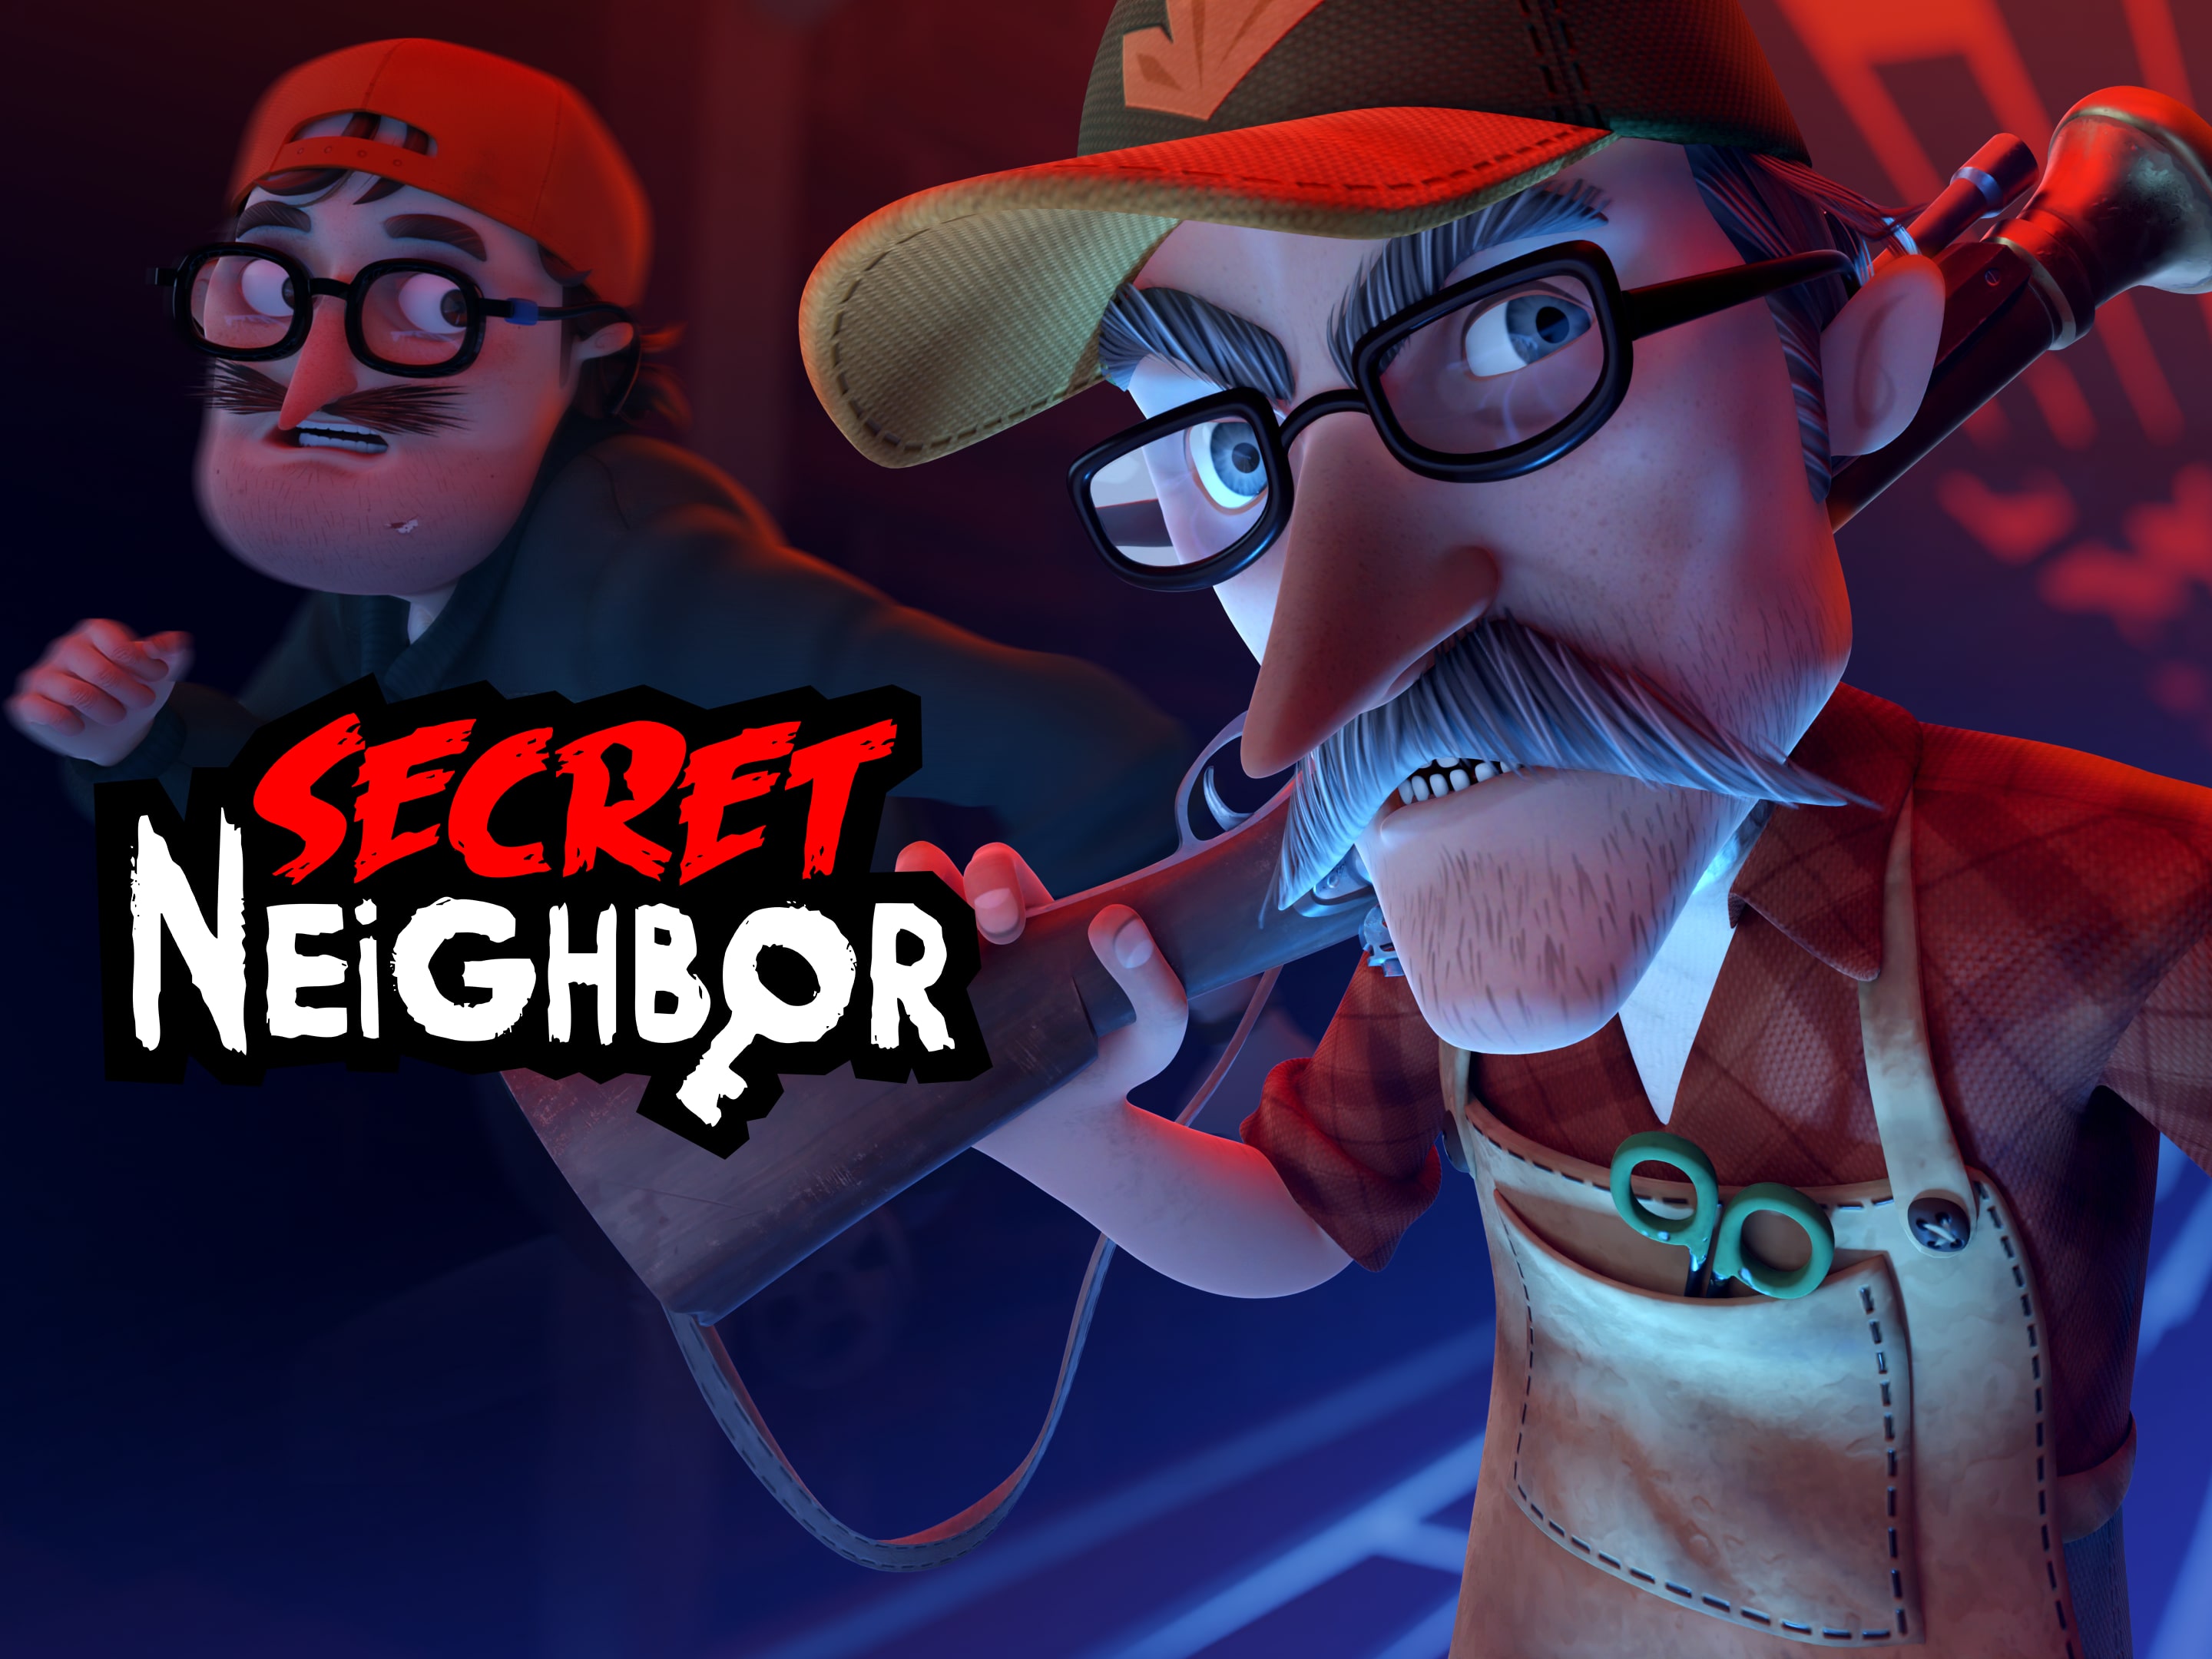 Secret Neighbor sneaks onto iOS - Play it FREE!